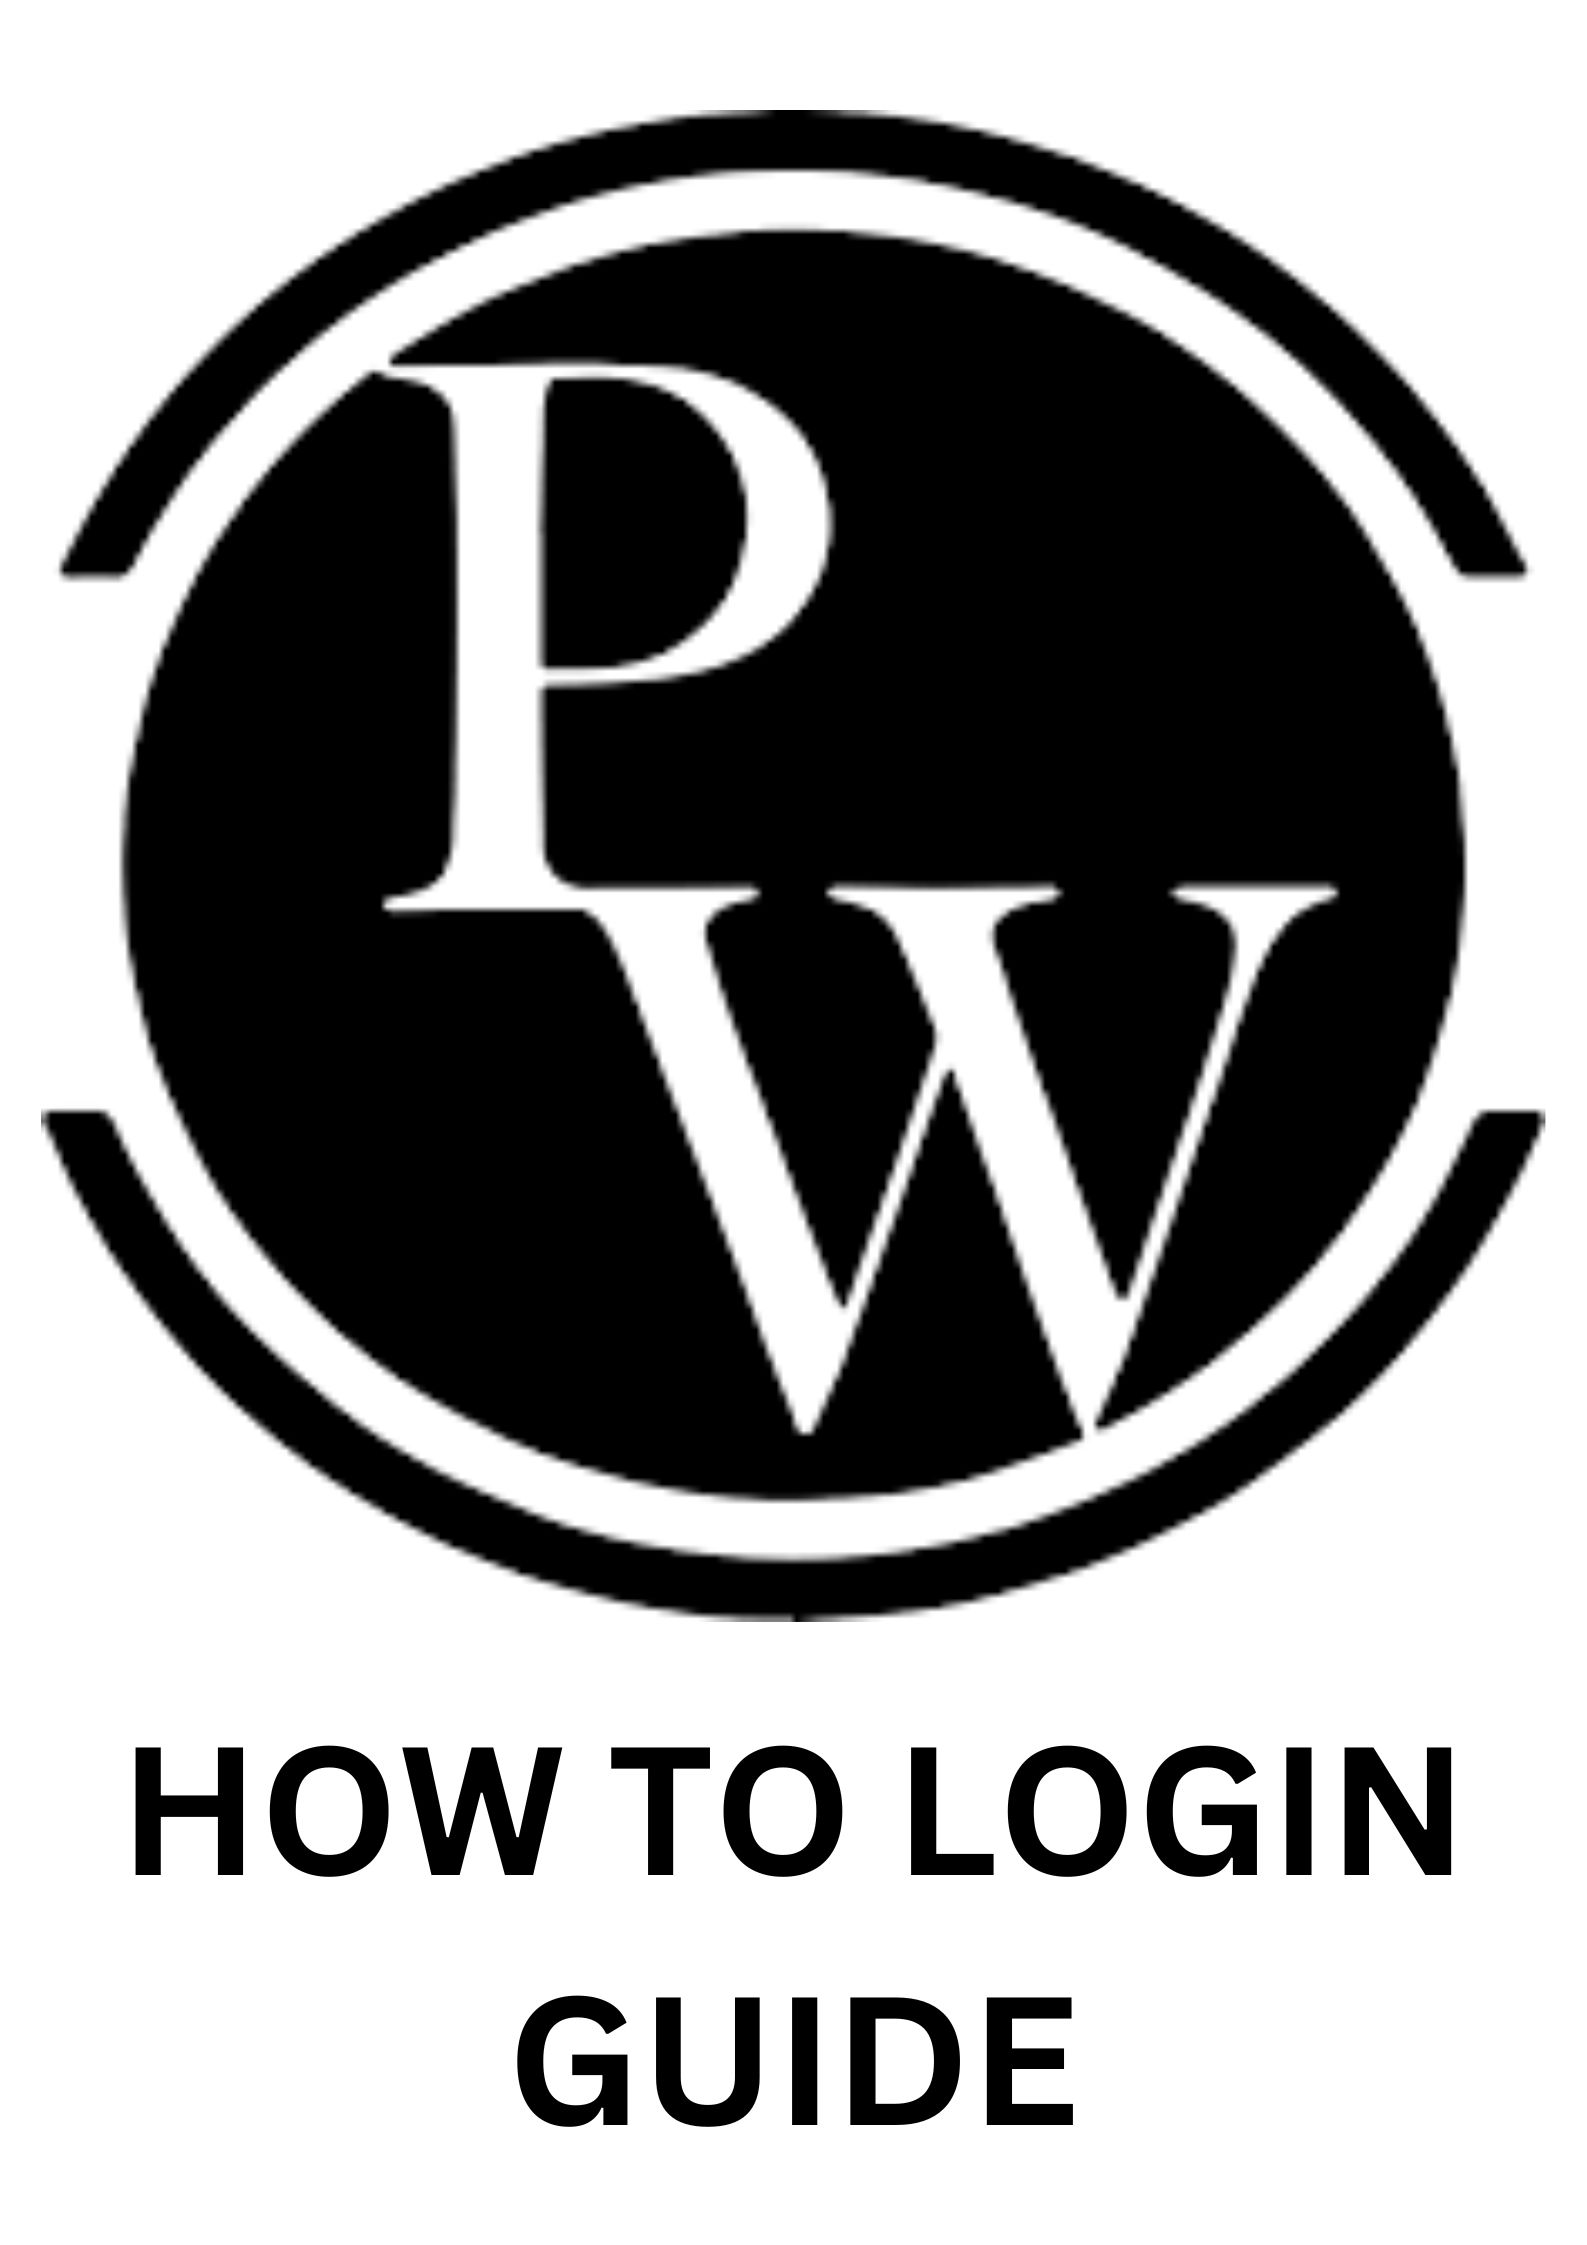 How To Do Physics Wallah Login - PW Login: Steps To Follow